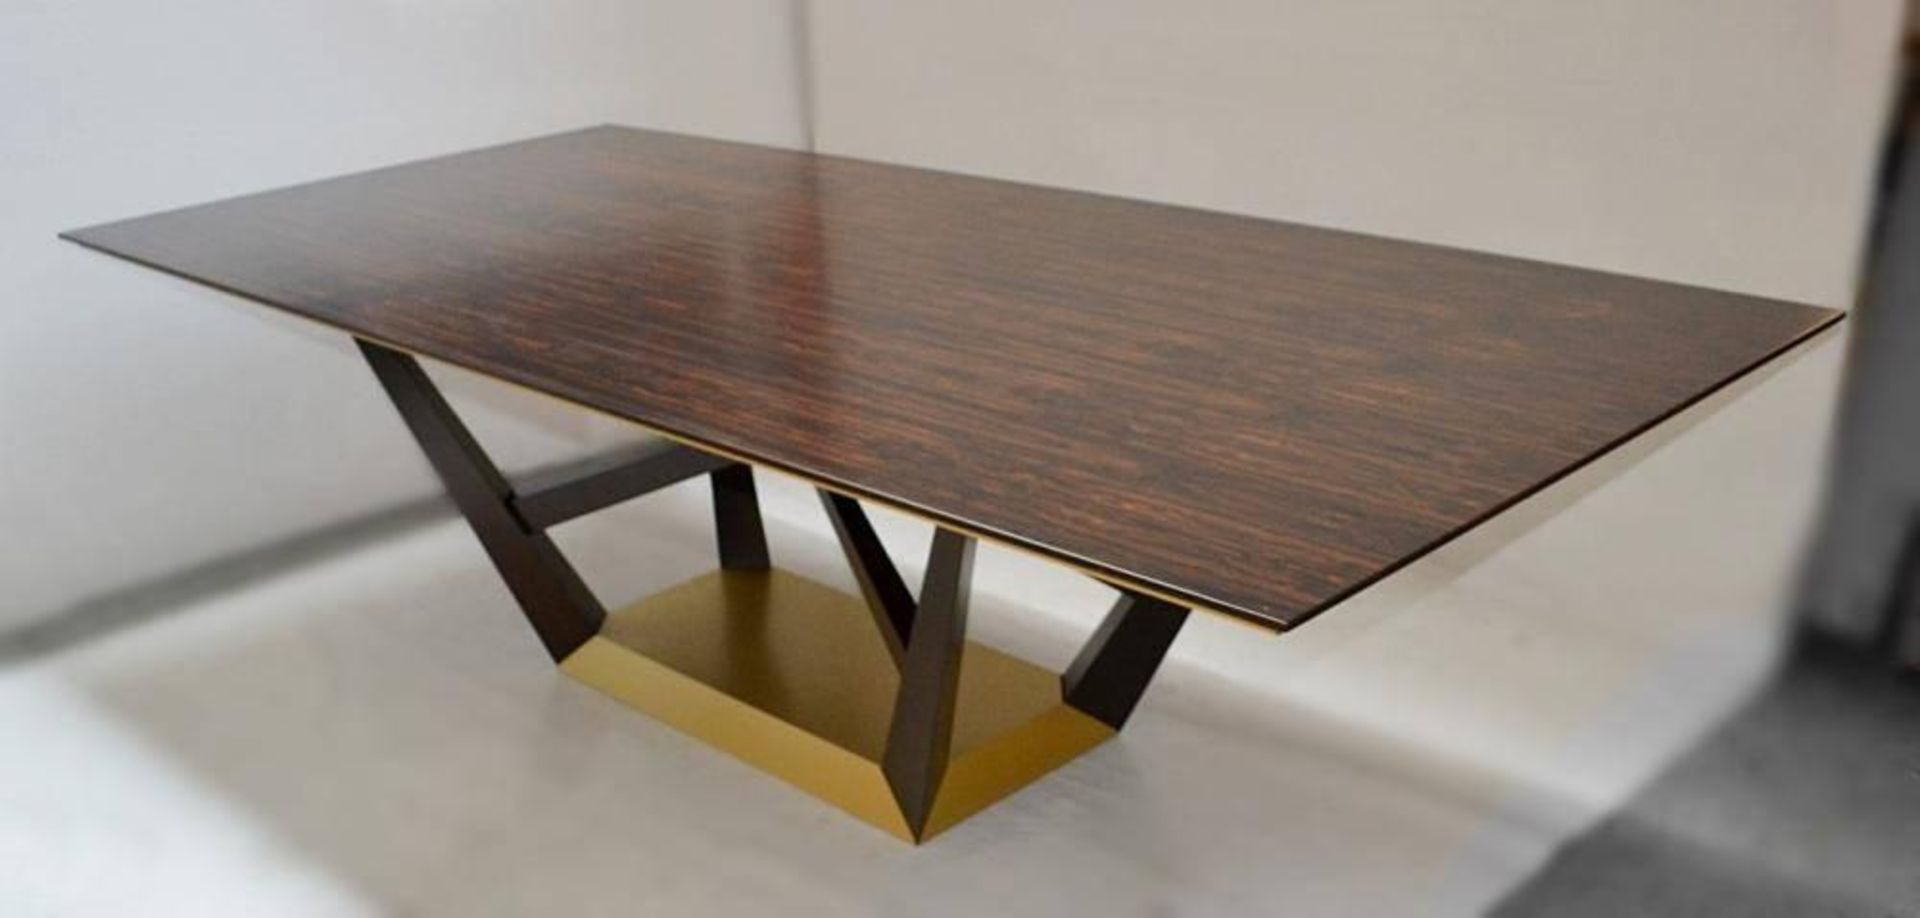 1 x PORADA Ellington Dining Table - 2.2 Metres In Length - Original RRP £7,495 - Image 11 of 12